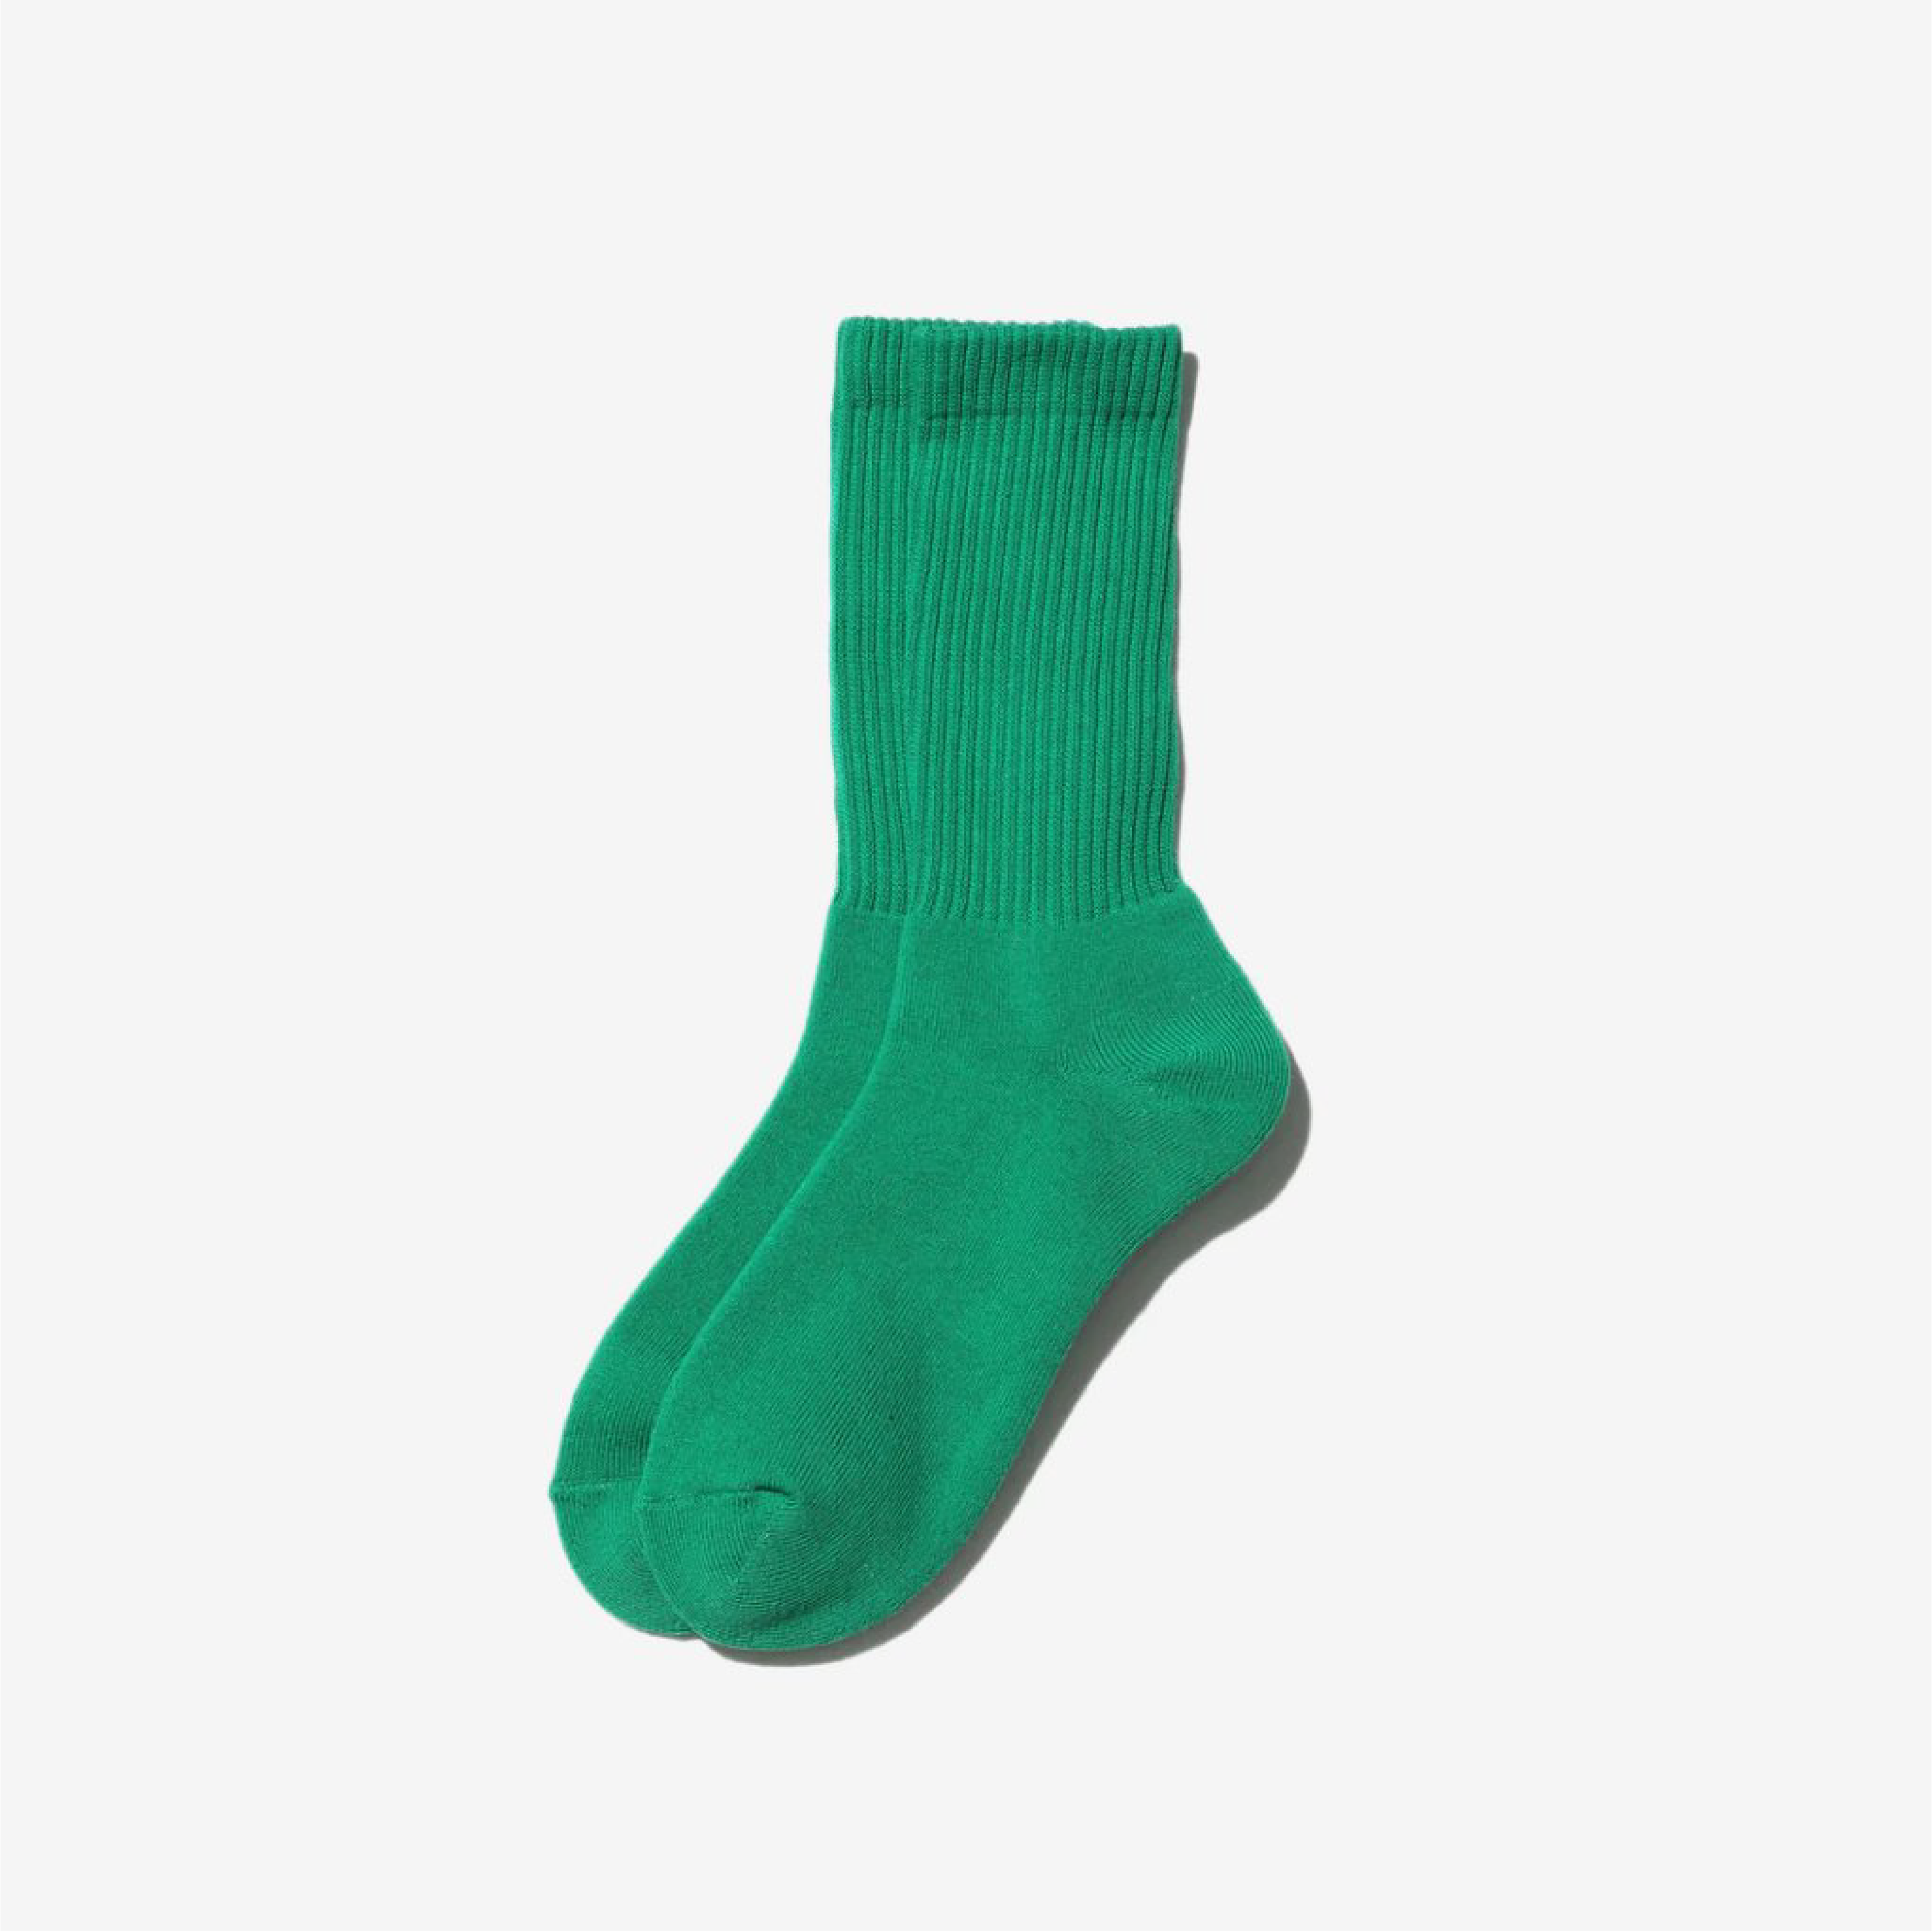 FreshService Original 3-Pack Socks (Kelly Green)